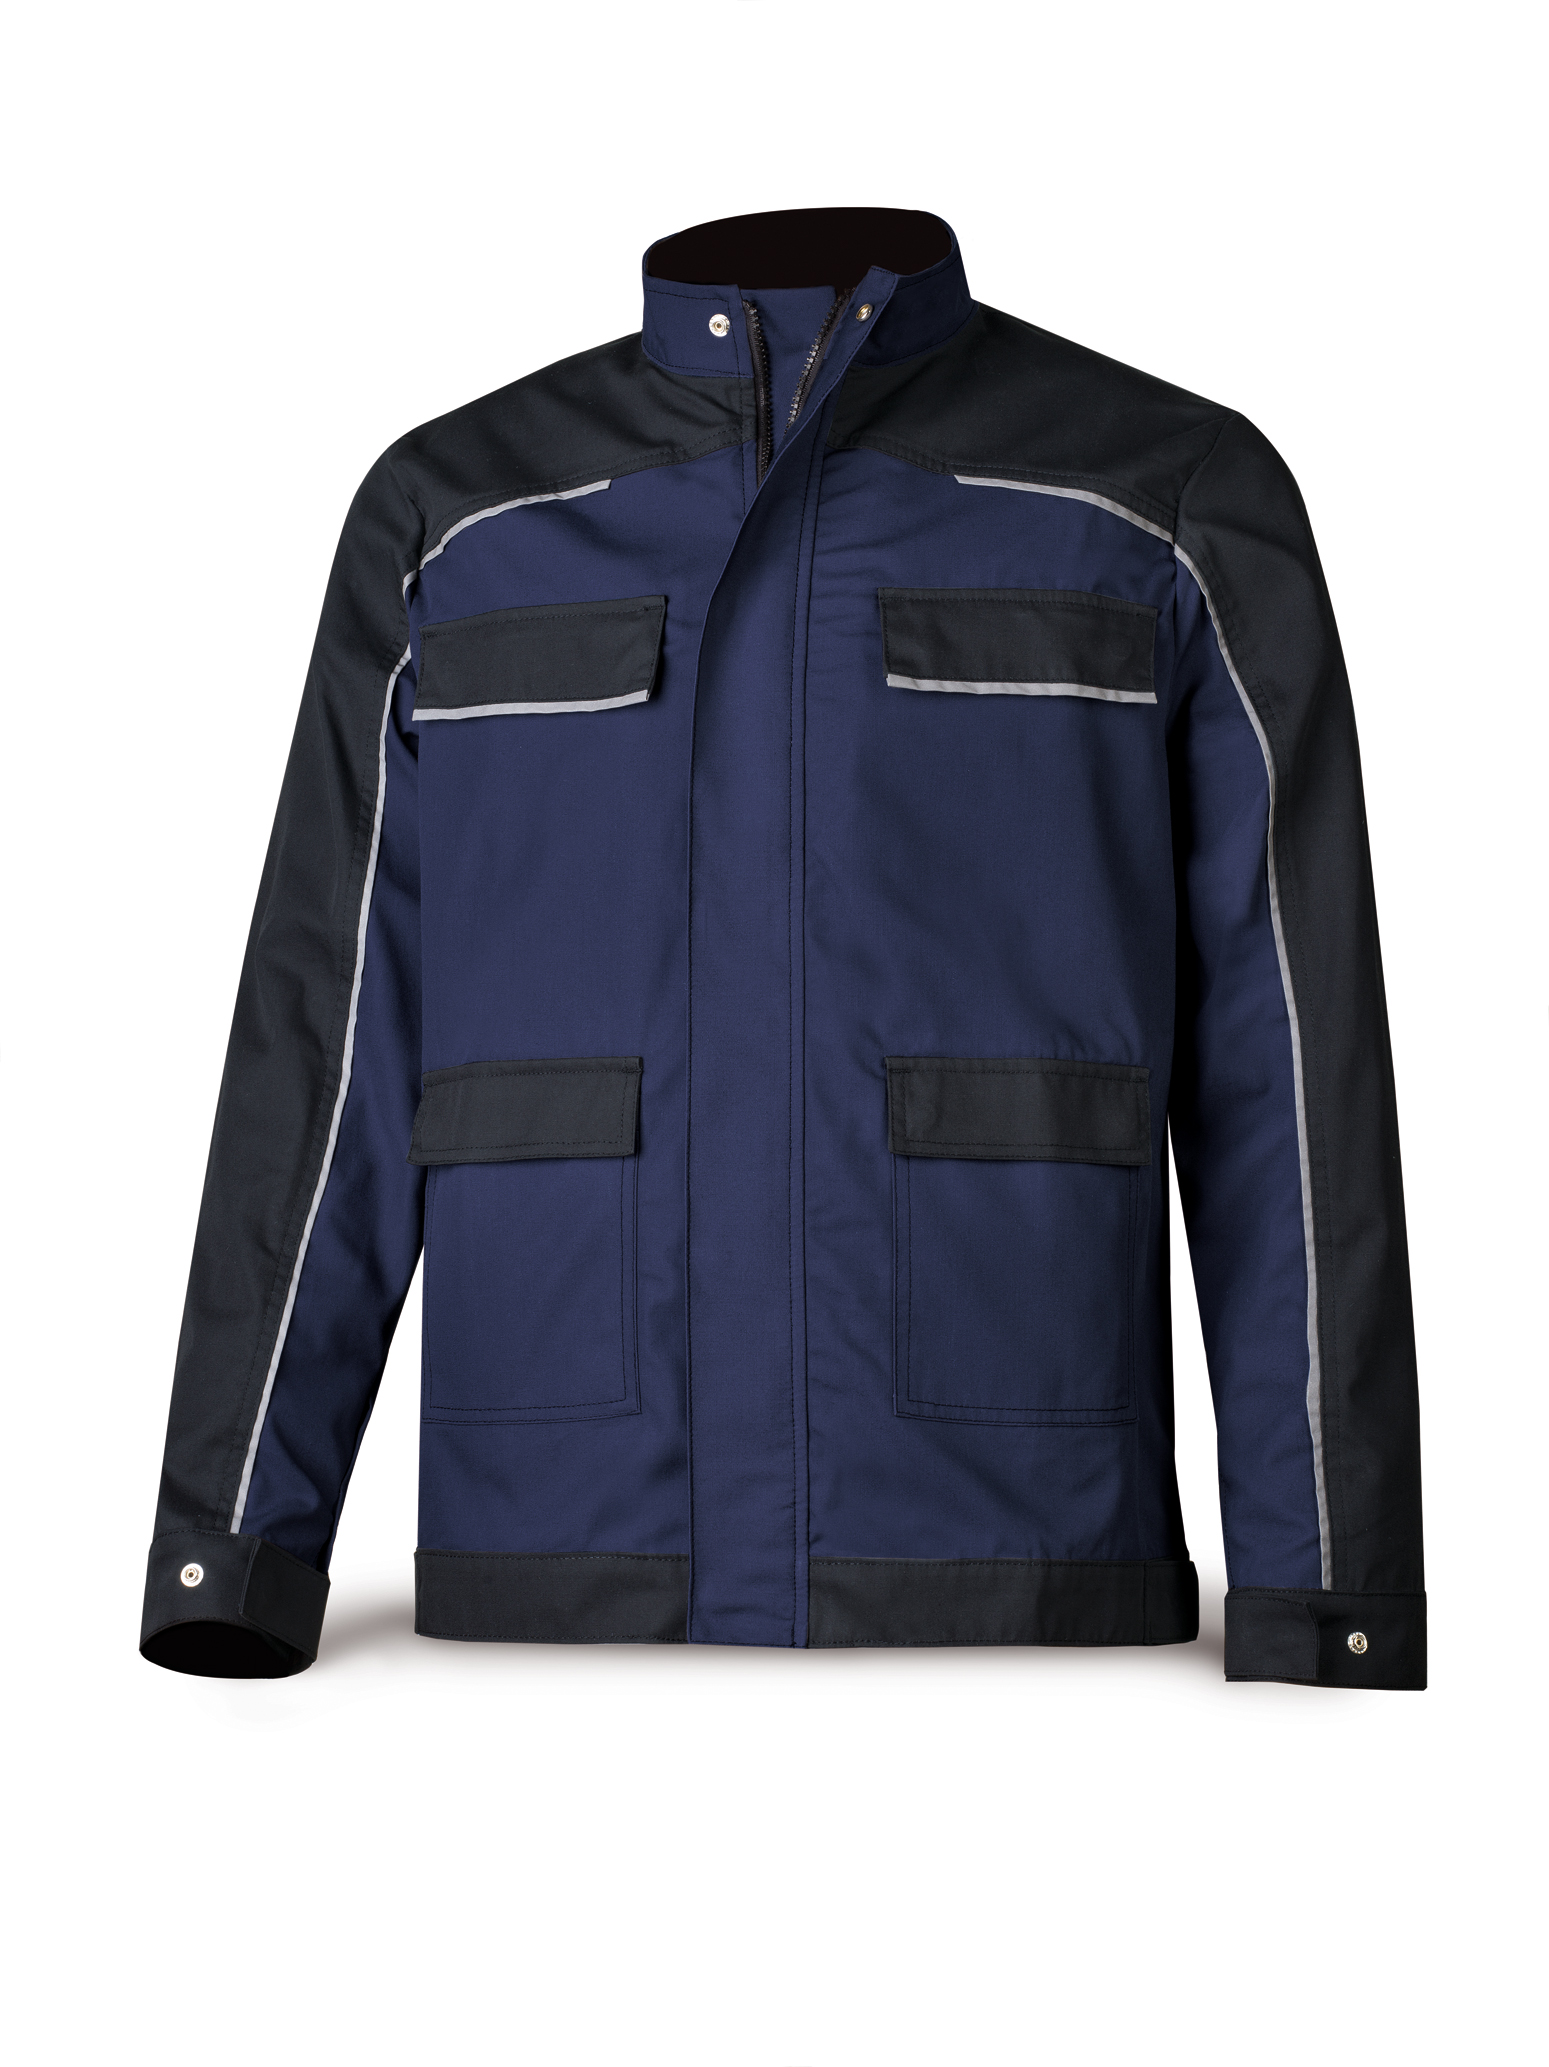 588-CANE Workwear Pro Series 245 gr. Canvas tergal jacket. Navy blue/Black.